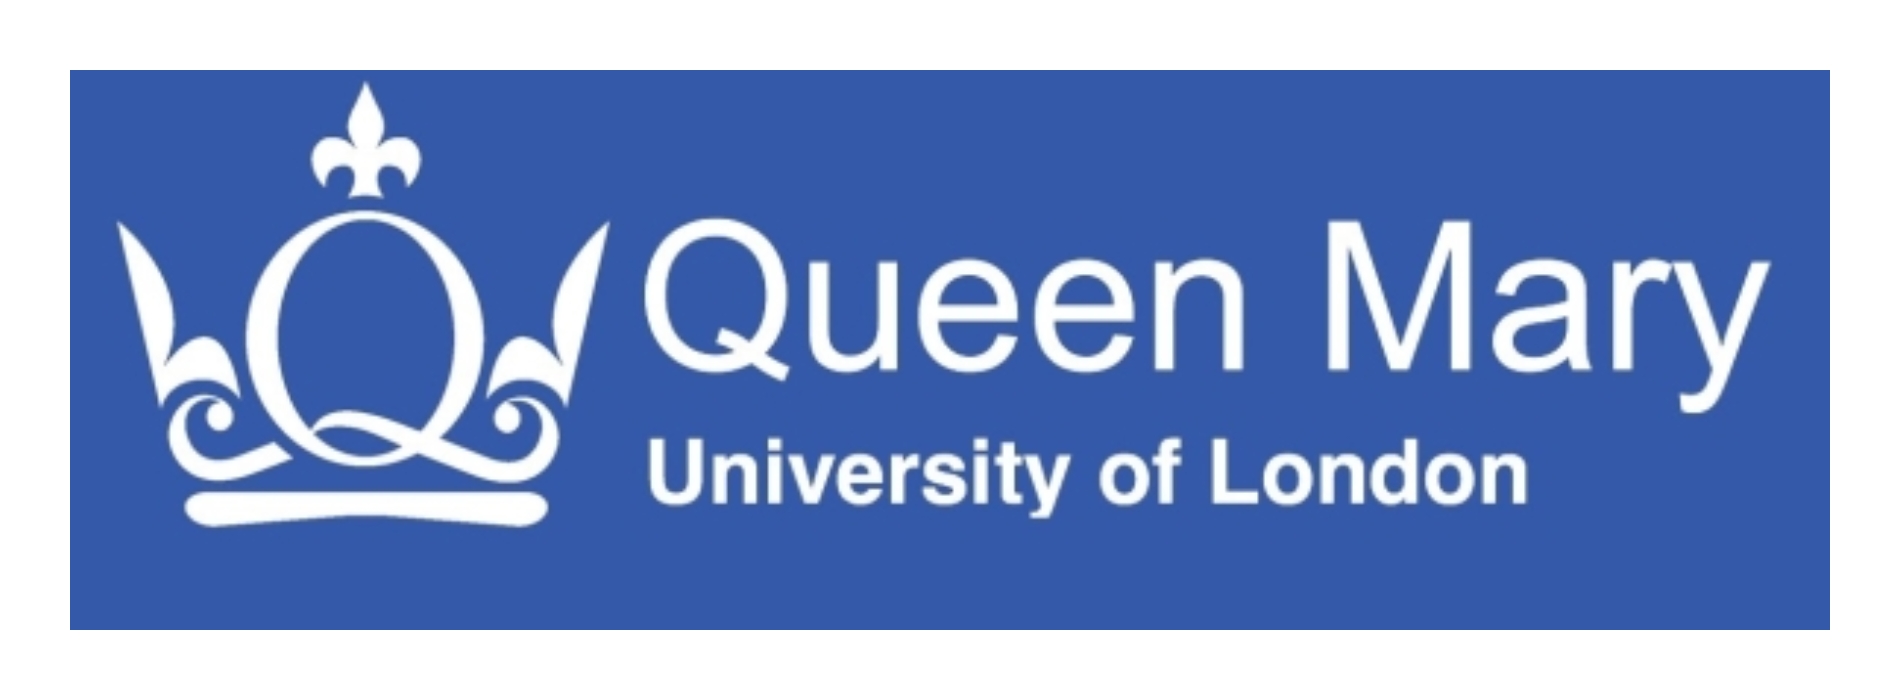 queen mary university of london logo